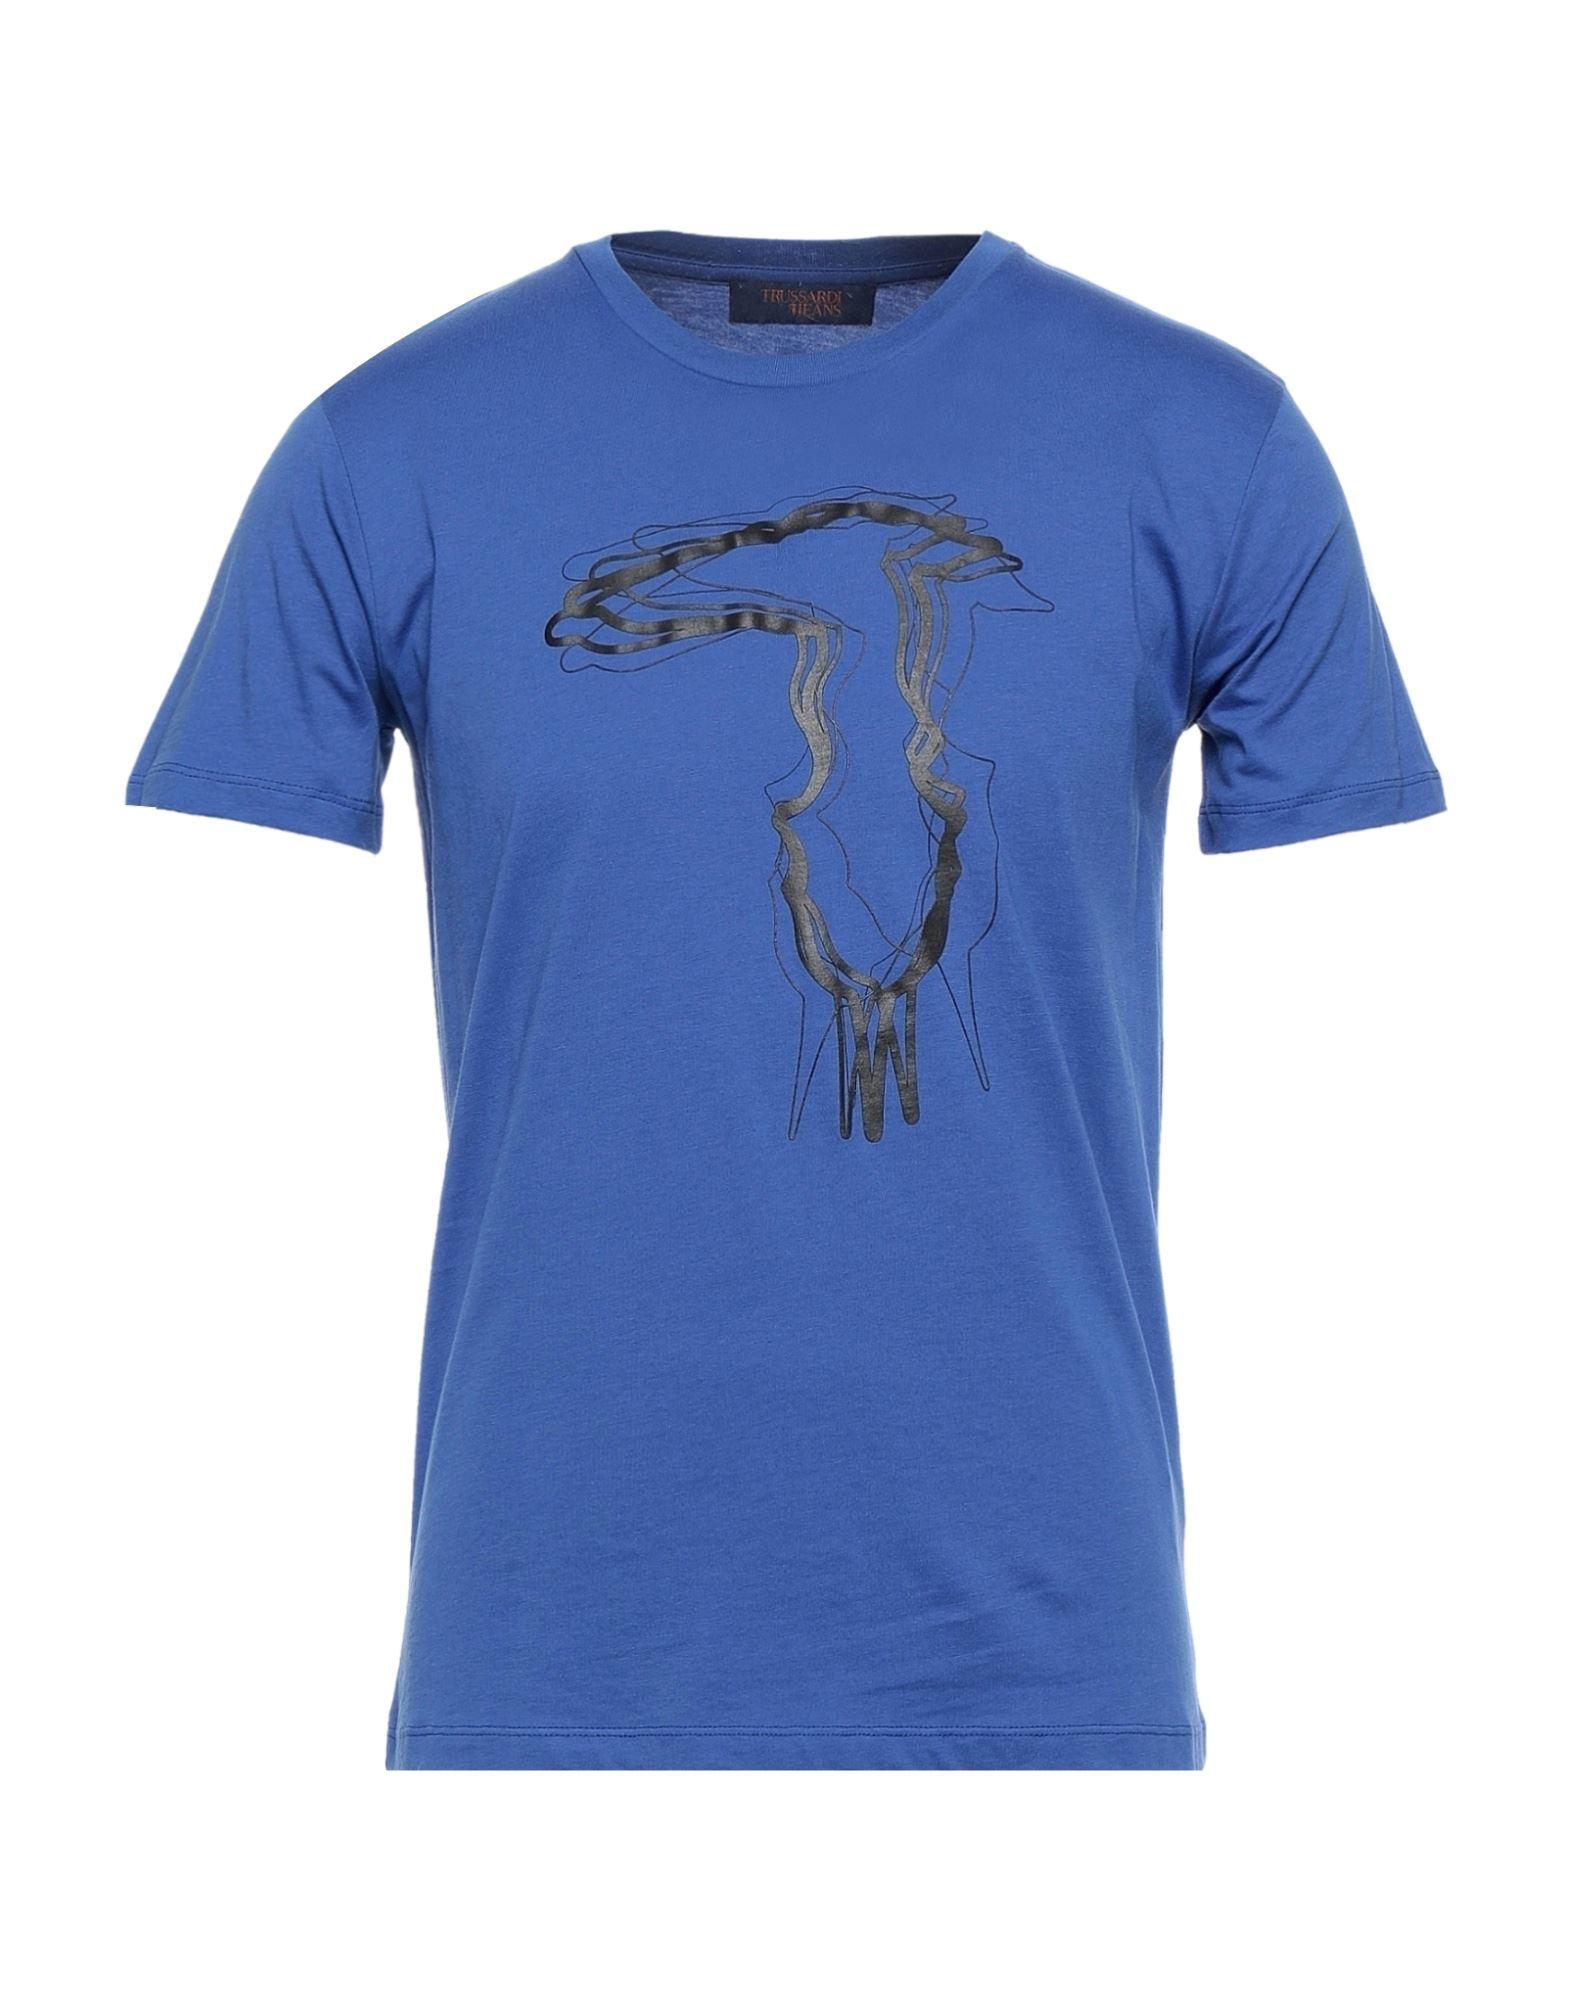 Trussardi Cotton T-shirt in Blue for Men - Lyst